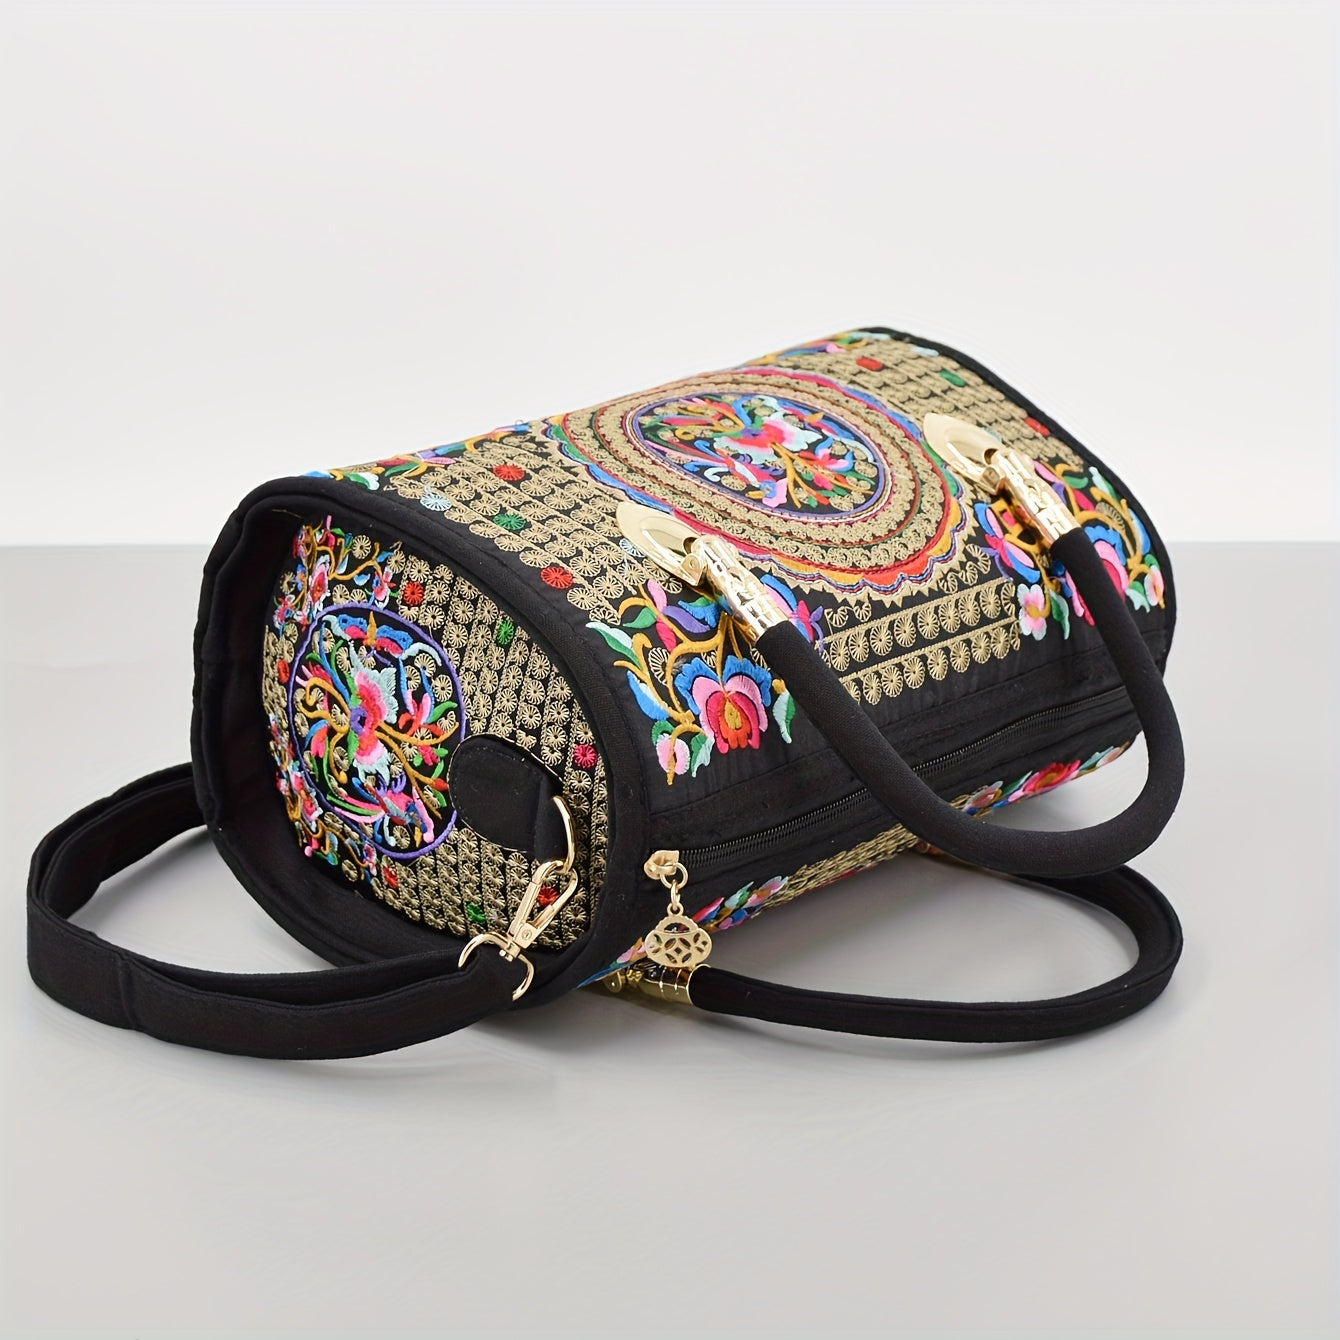 Vintage Embroidered Boston Bag, Retro Bohemian Tote Bag, Women's Ethnic Style Handbag & Purse